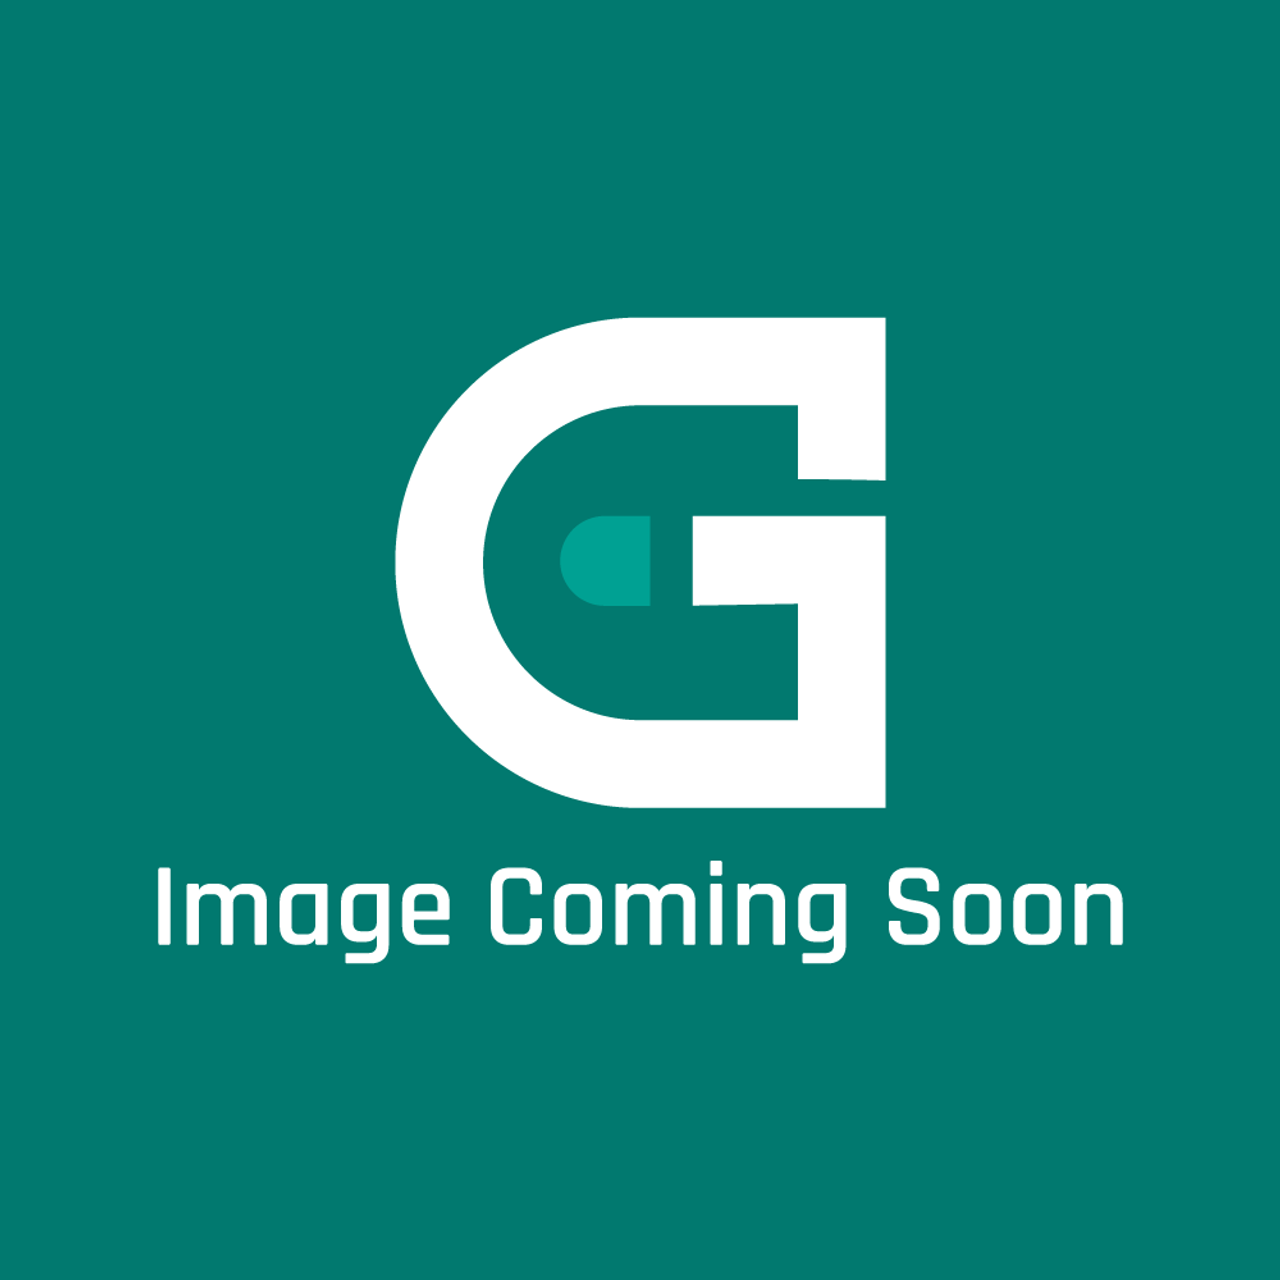 Garland 4532741 - Platen Heater 20 X 11.5 - Image Coming Soon!